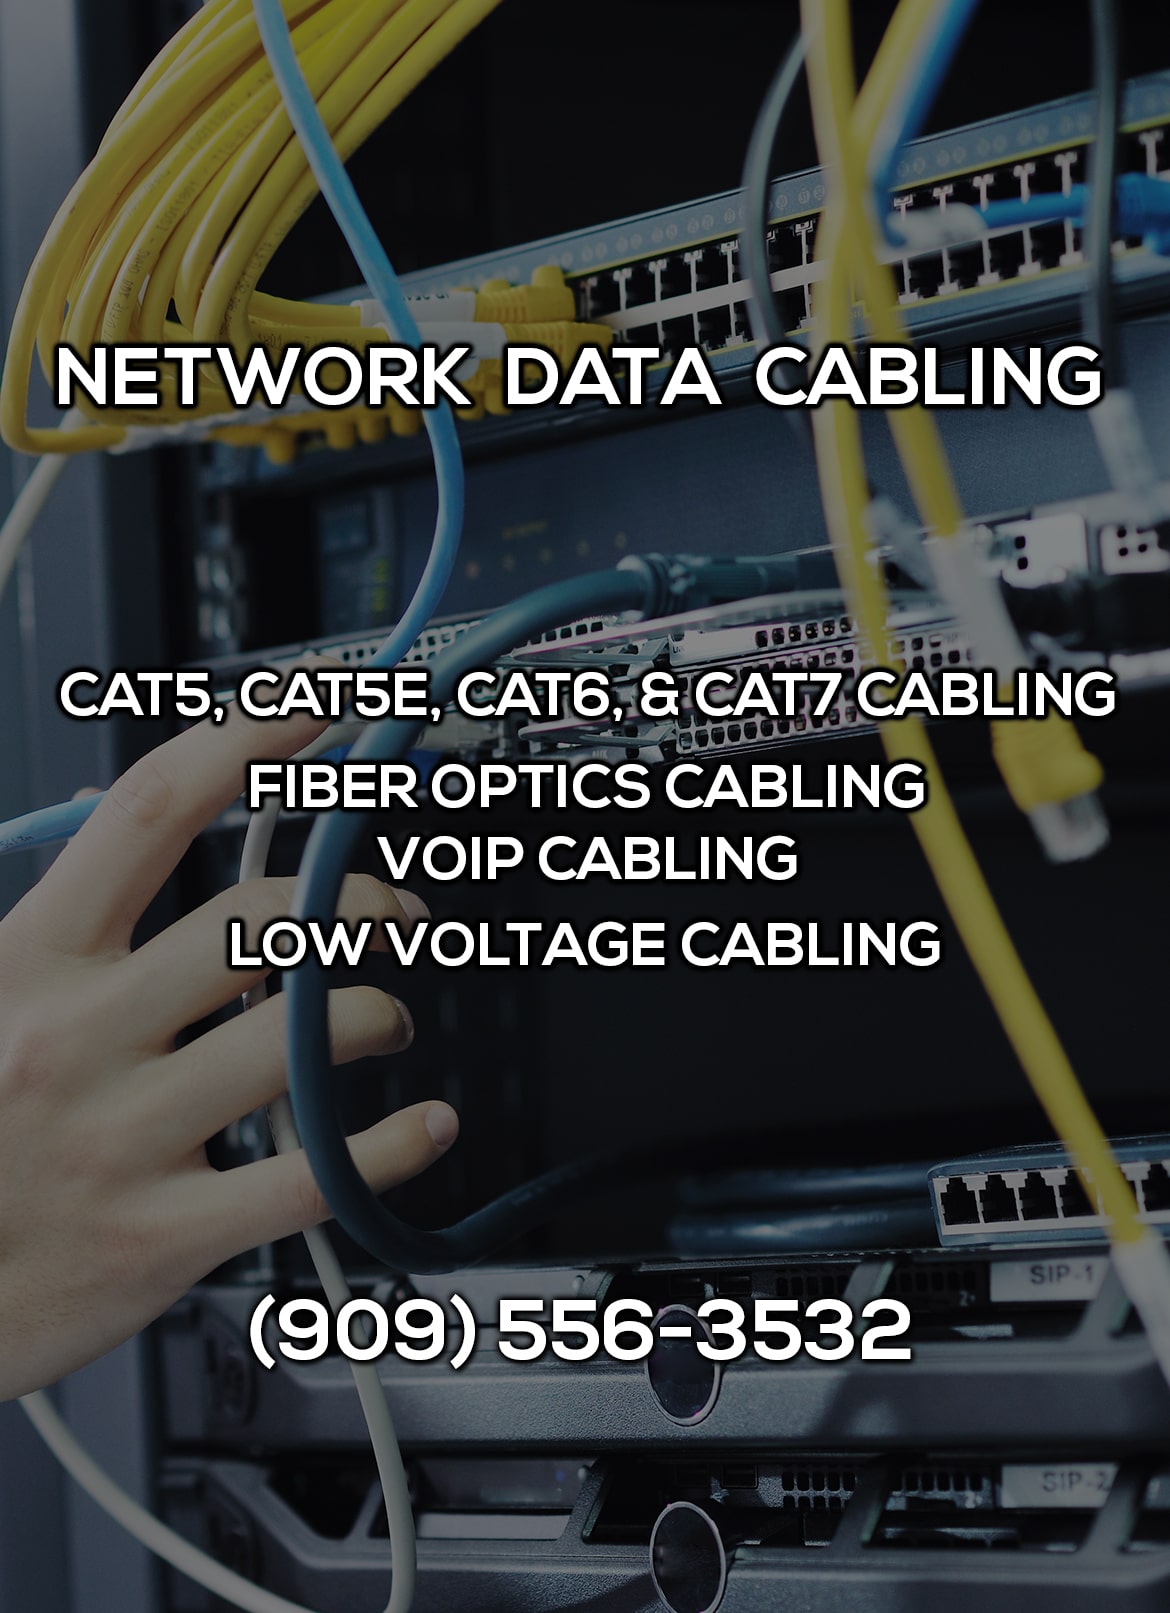 Network Data Cabling in Ontario CA